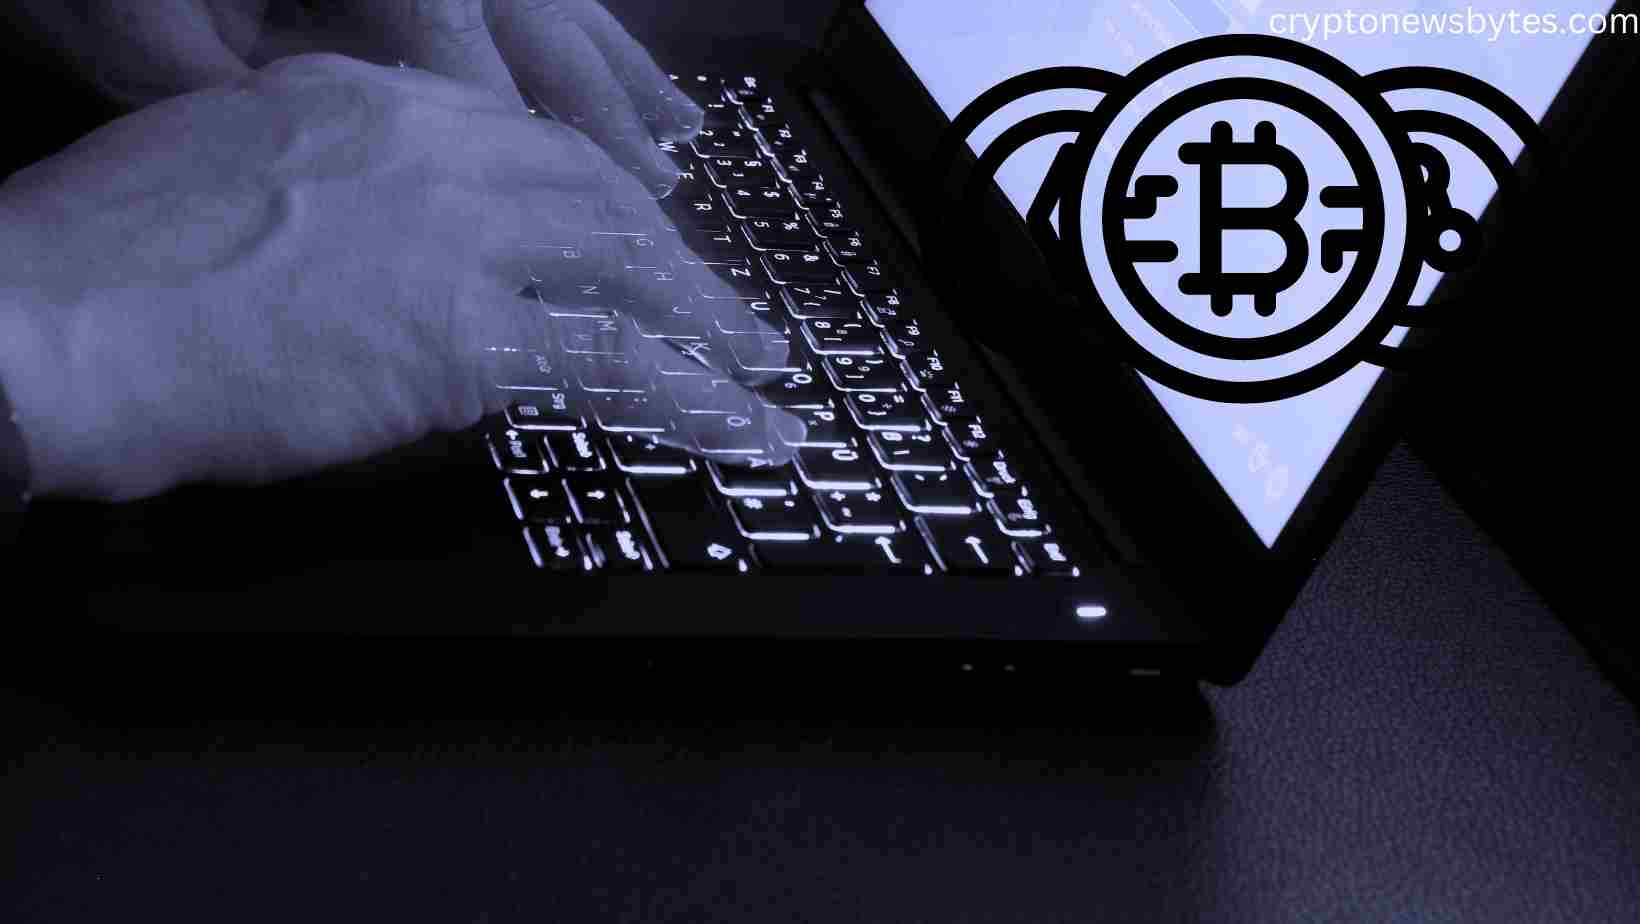 CRYPTONEWSBYTES.COM cnb-Darknet-1 Ohio Man Sentenced in $20 Million Bitcoin Heist: Darknet Cryptocurrency Theft Lands Convict in Prison  